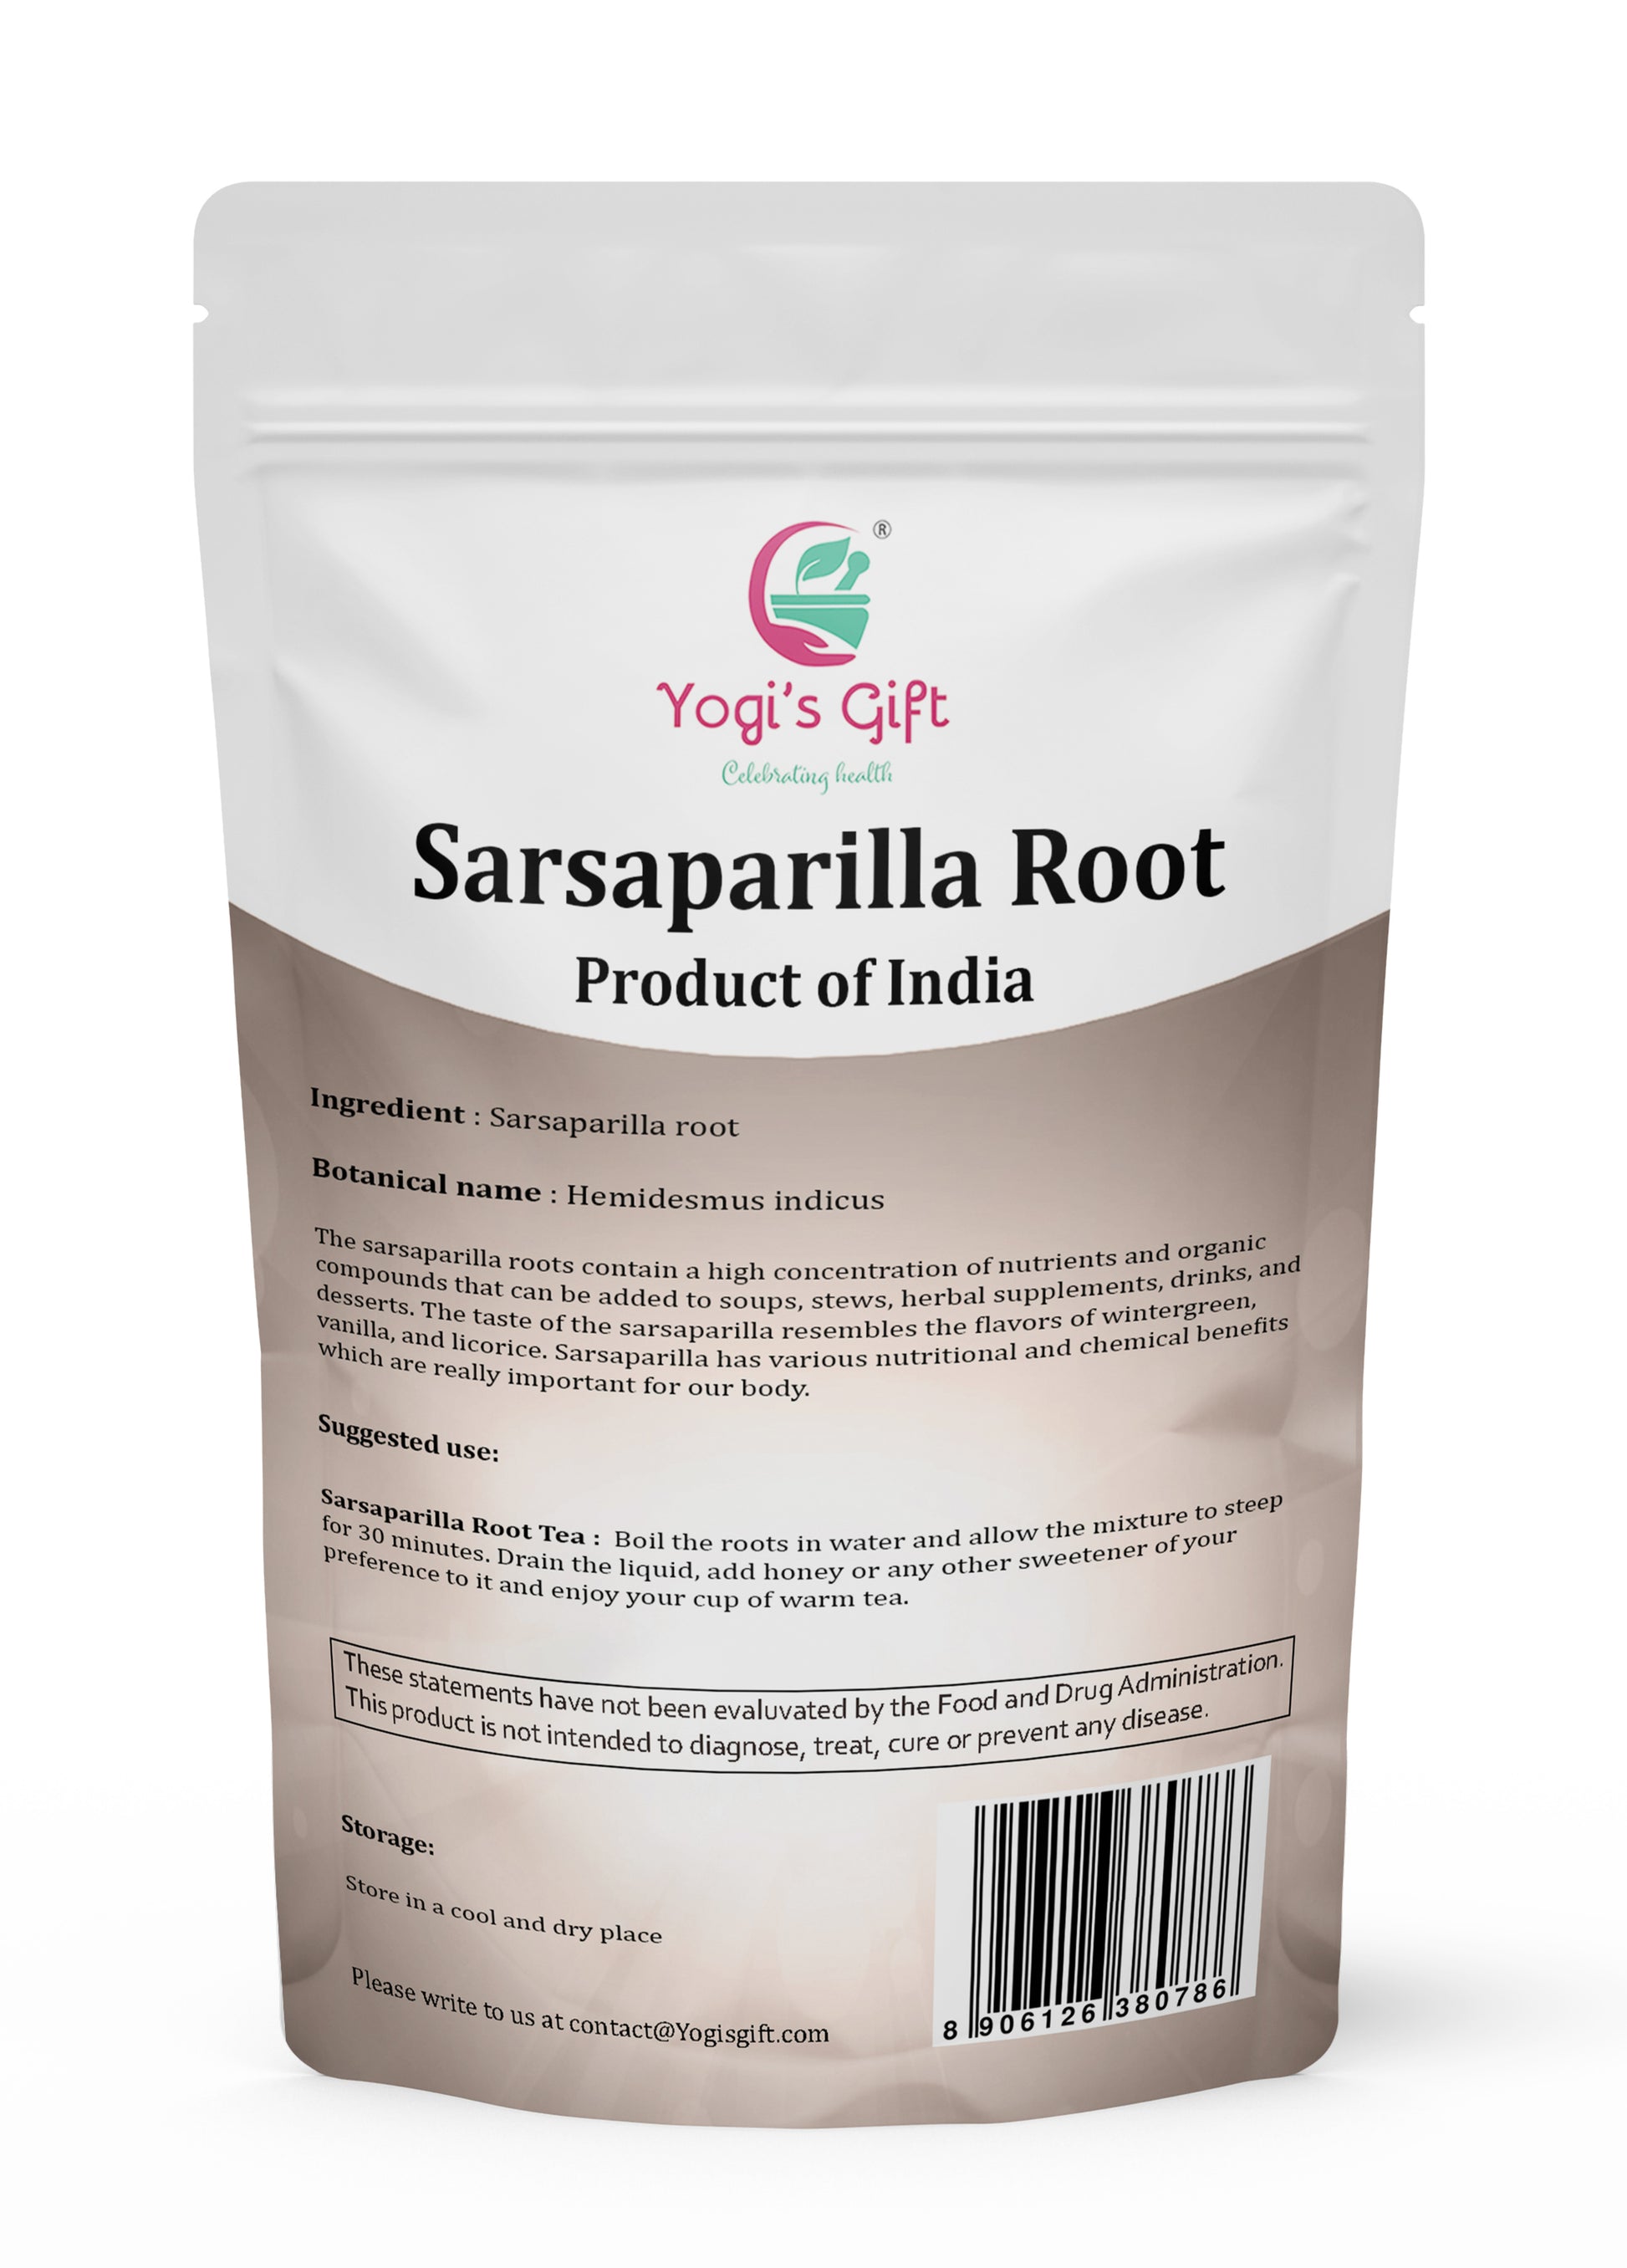 Sarsaparilla Benefits